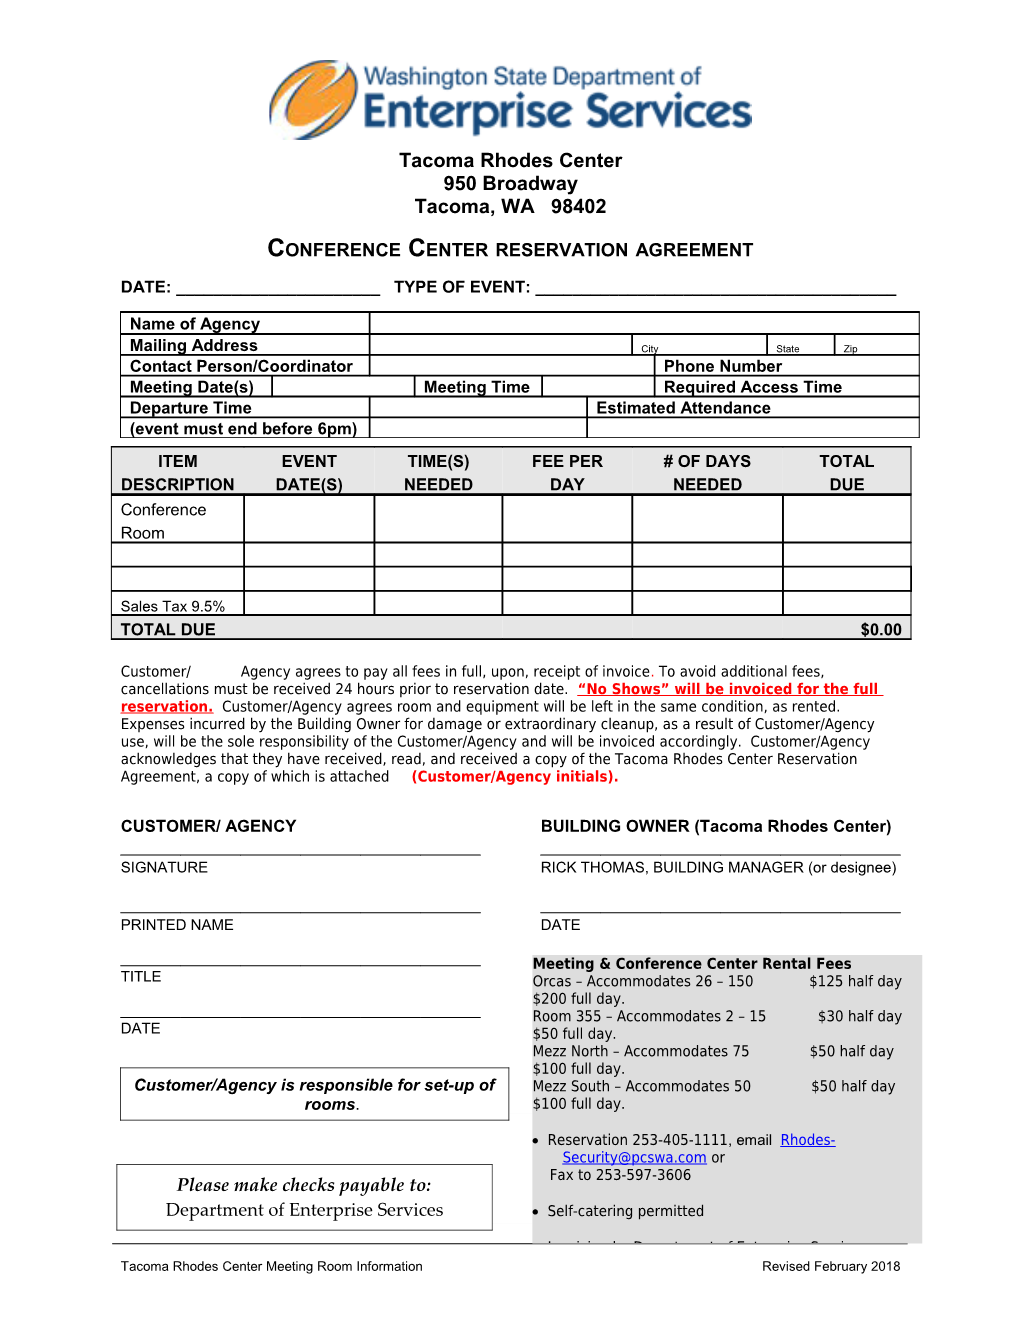 Tacoma Rhodes Center Conference Room Reservation Form